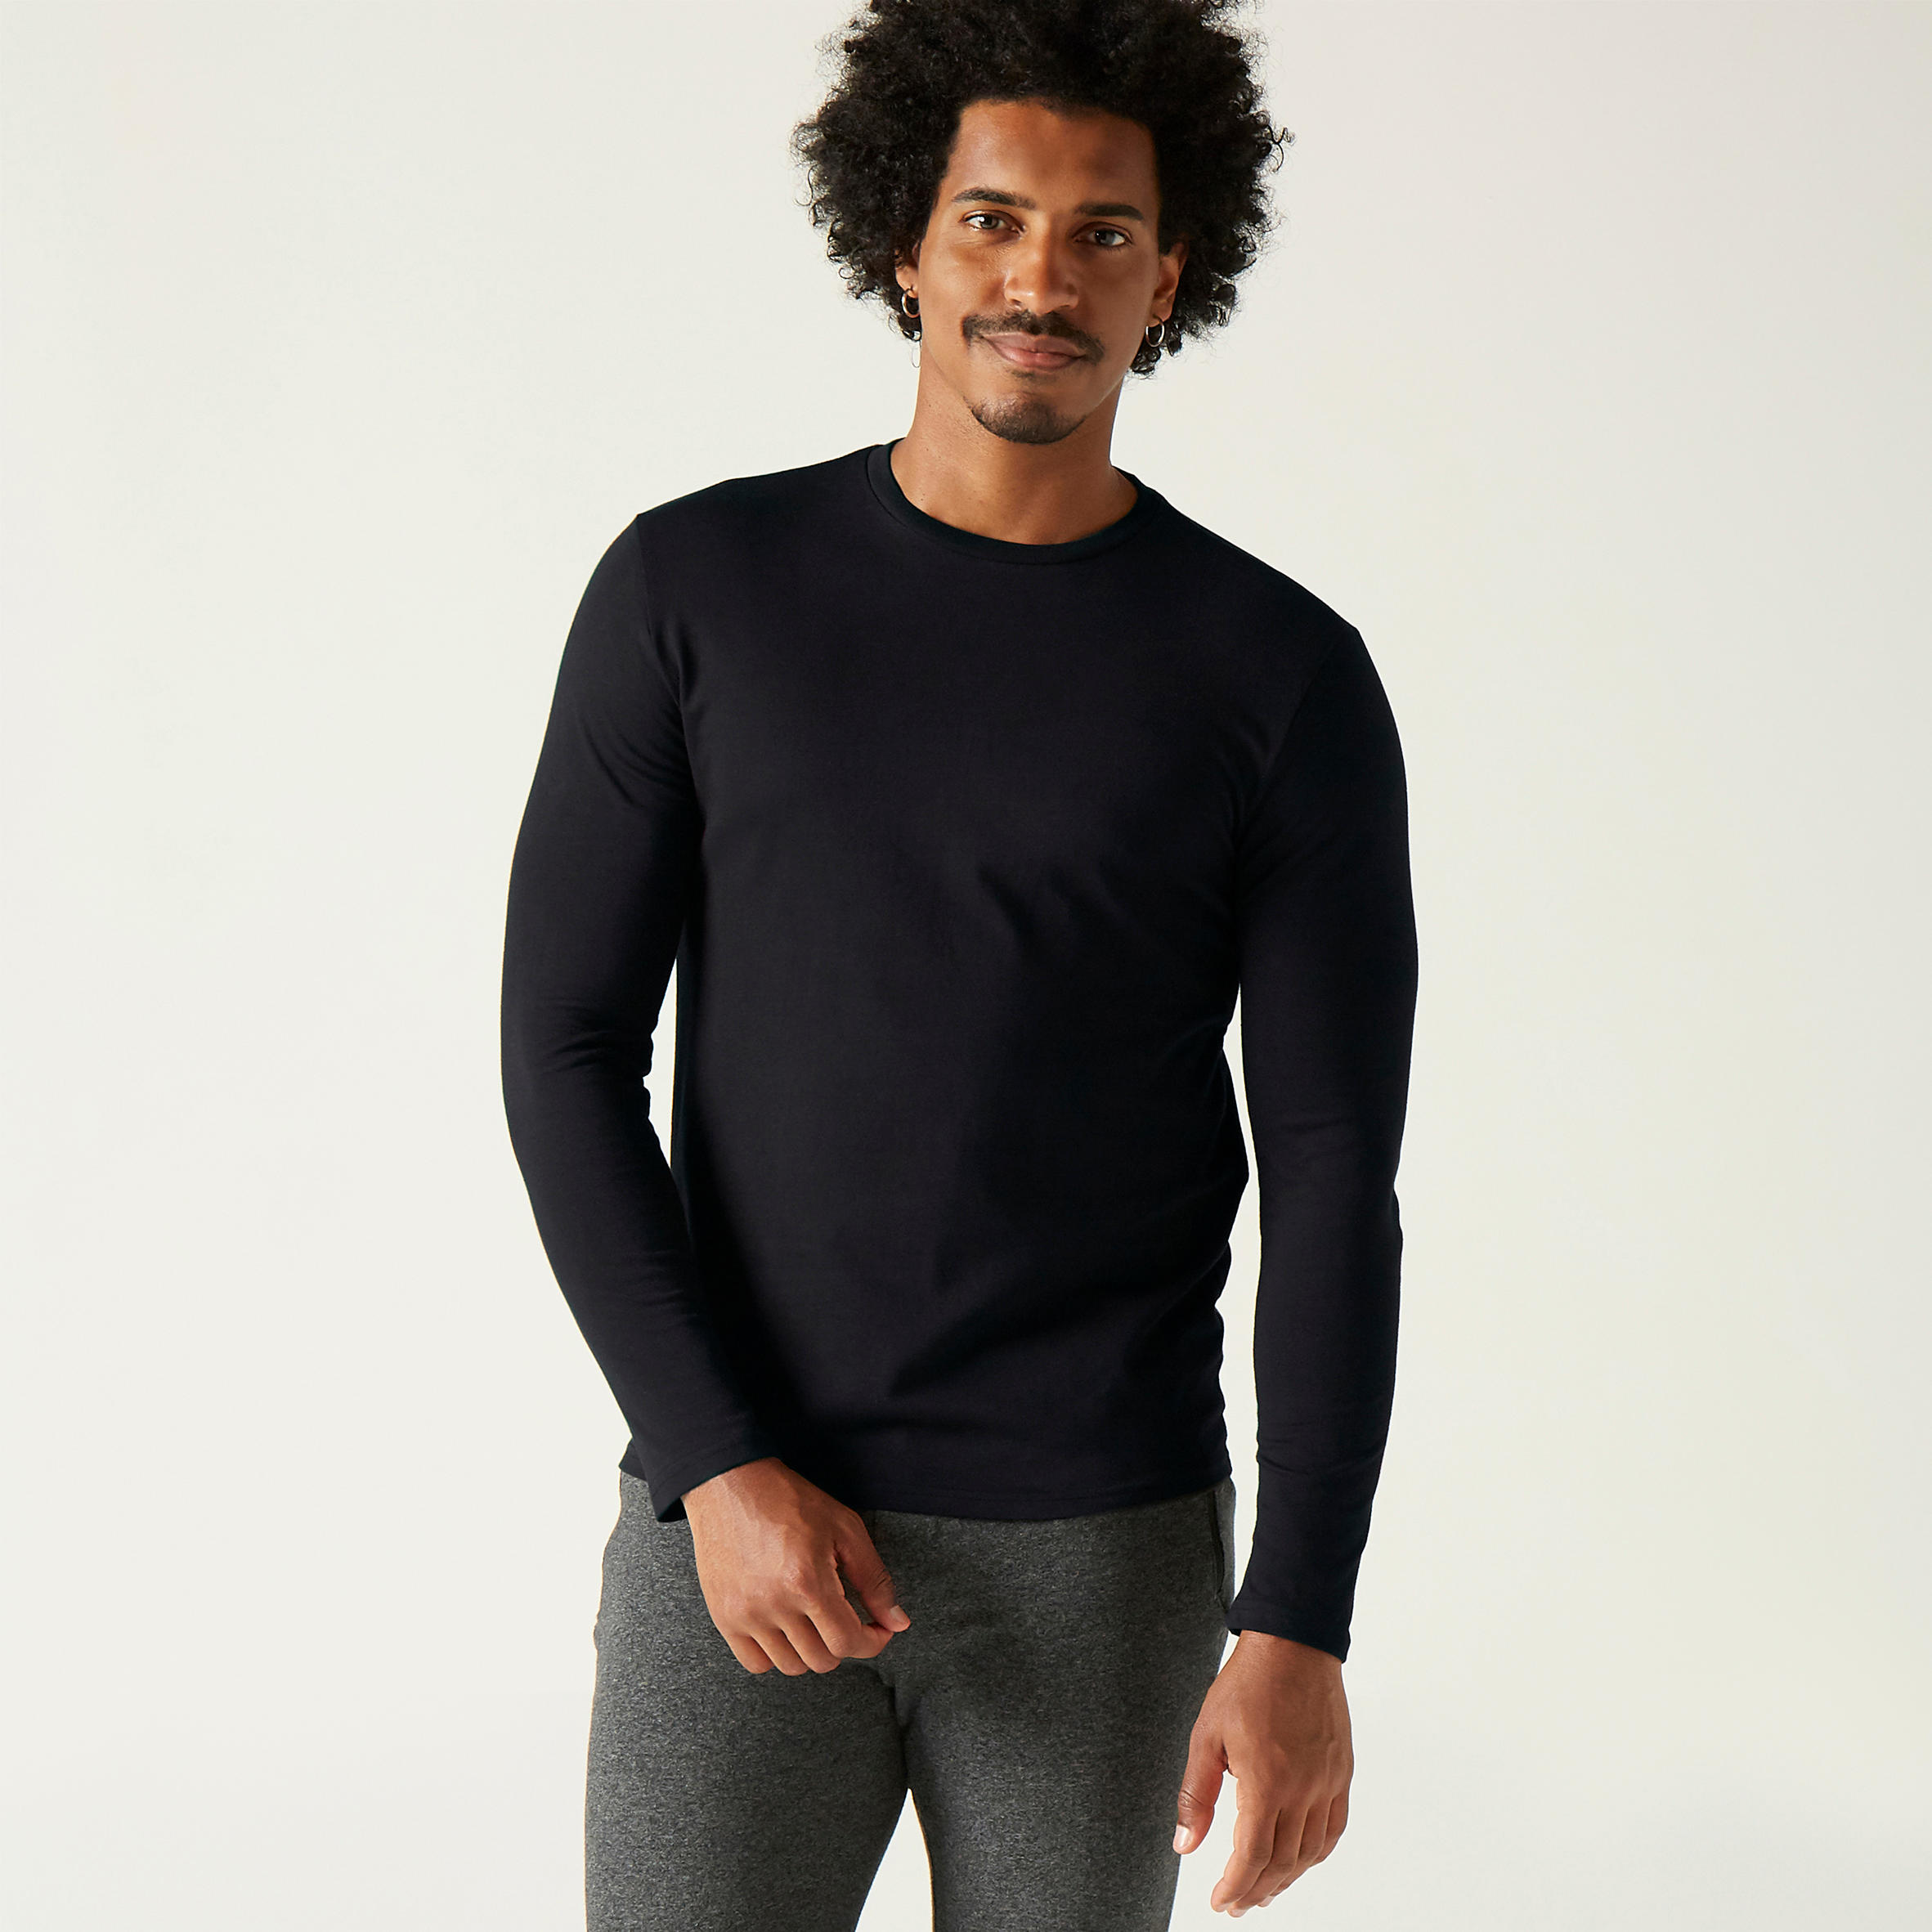 Men's Long-Sleeved Straight-Cut Crew Neck Cotton Fitness T-Shirt 100 - Black 1/6